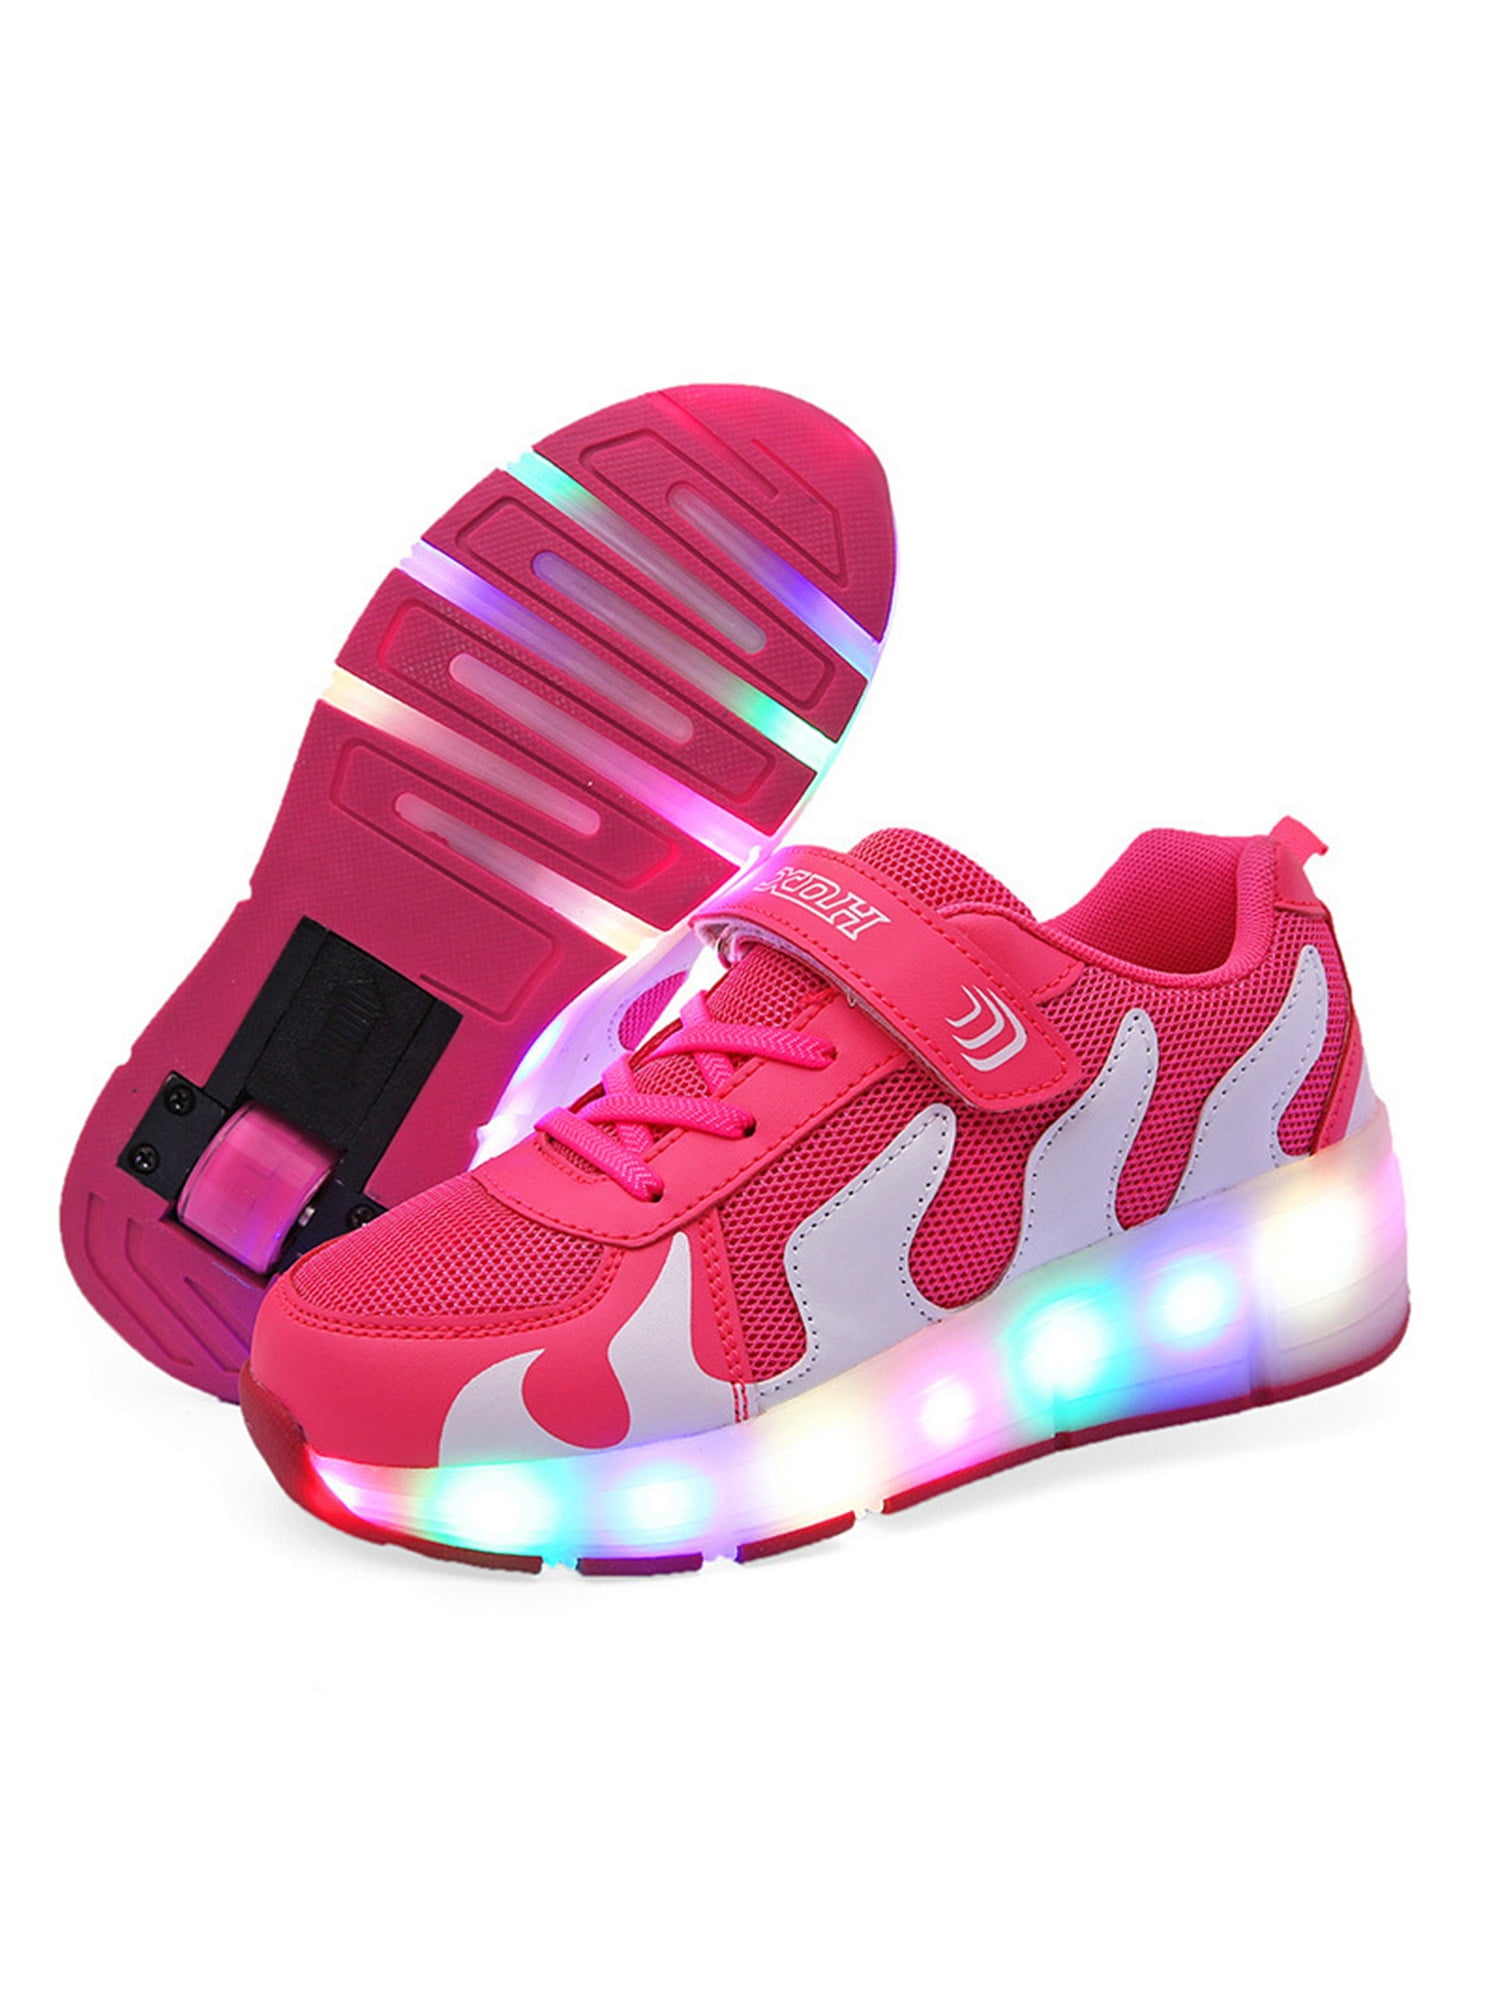 Comfortable Light Skates Fashion Light Up Luminous Shoes Skates Kids Roller Skate Shoes 7 Colors LED Sneakers Single Wheel Sneaker 